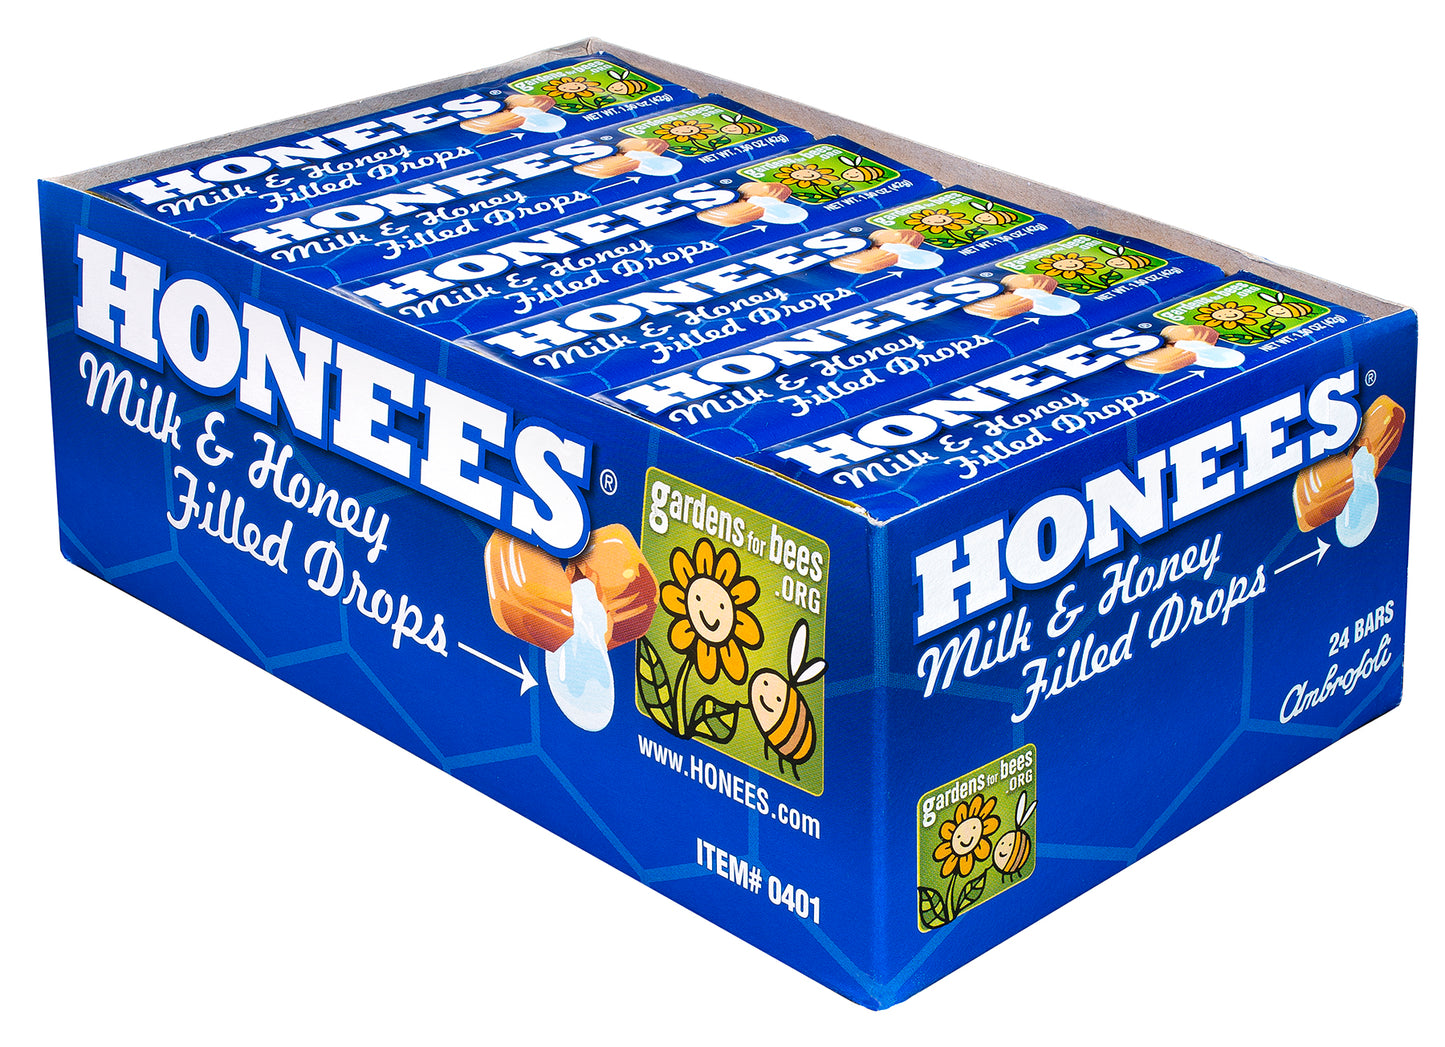 HONEES Milk and Honey Filled Drops, 1.6oz bars (Pack of 24)